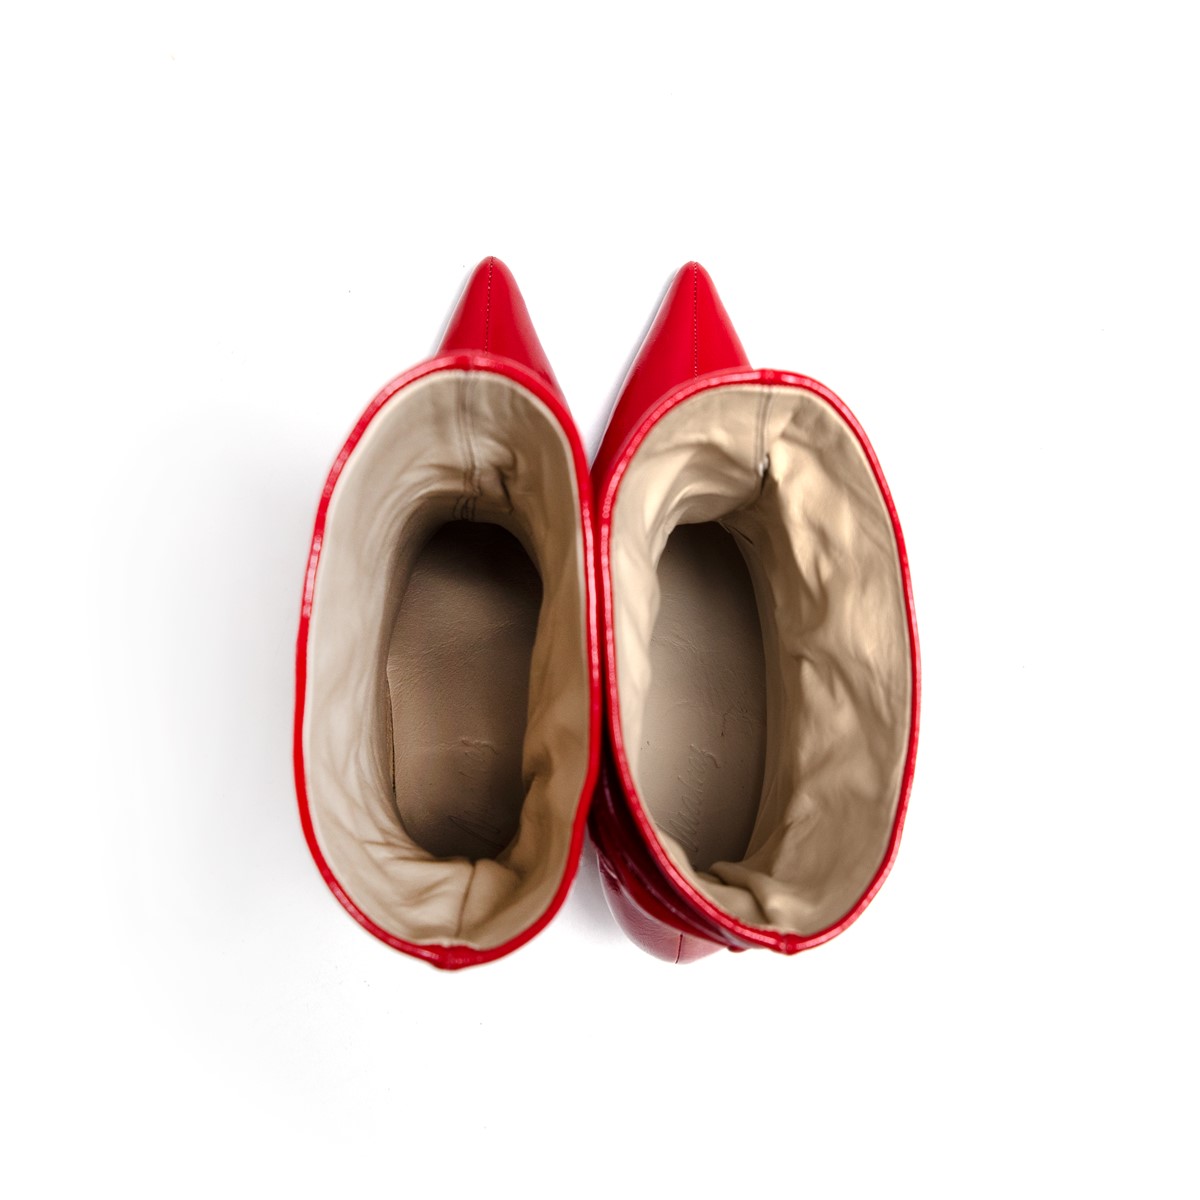 Matraş Kadın Rugan Topuklu Çizme Kırmızı 9FF-1453